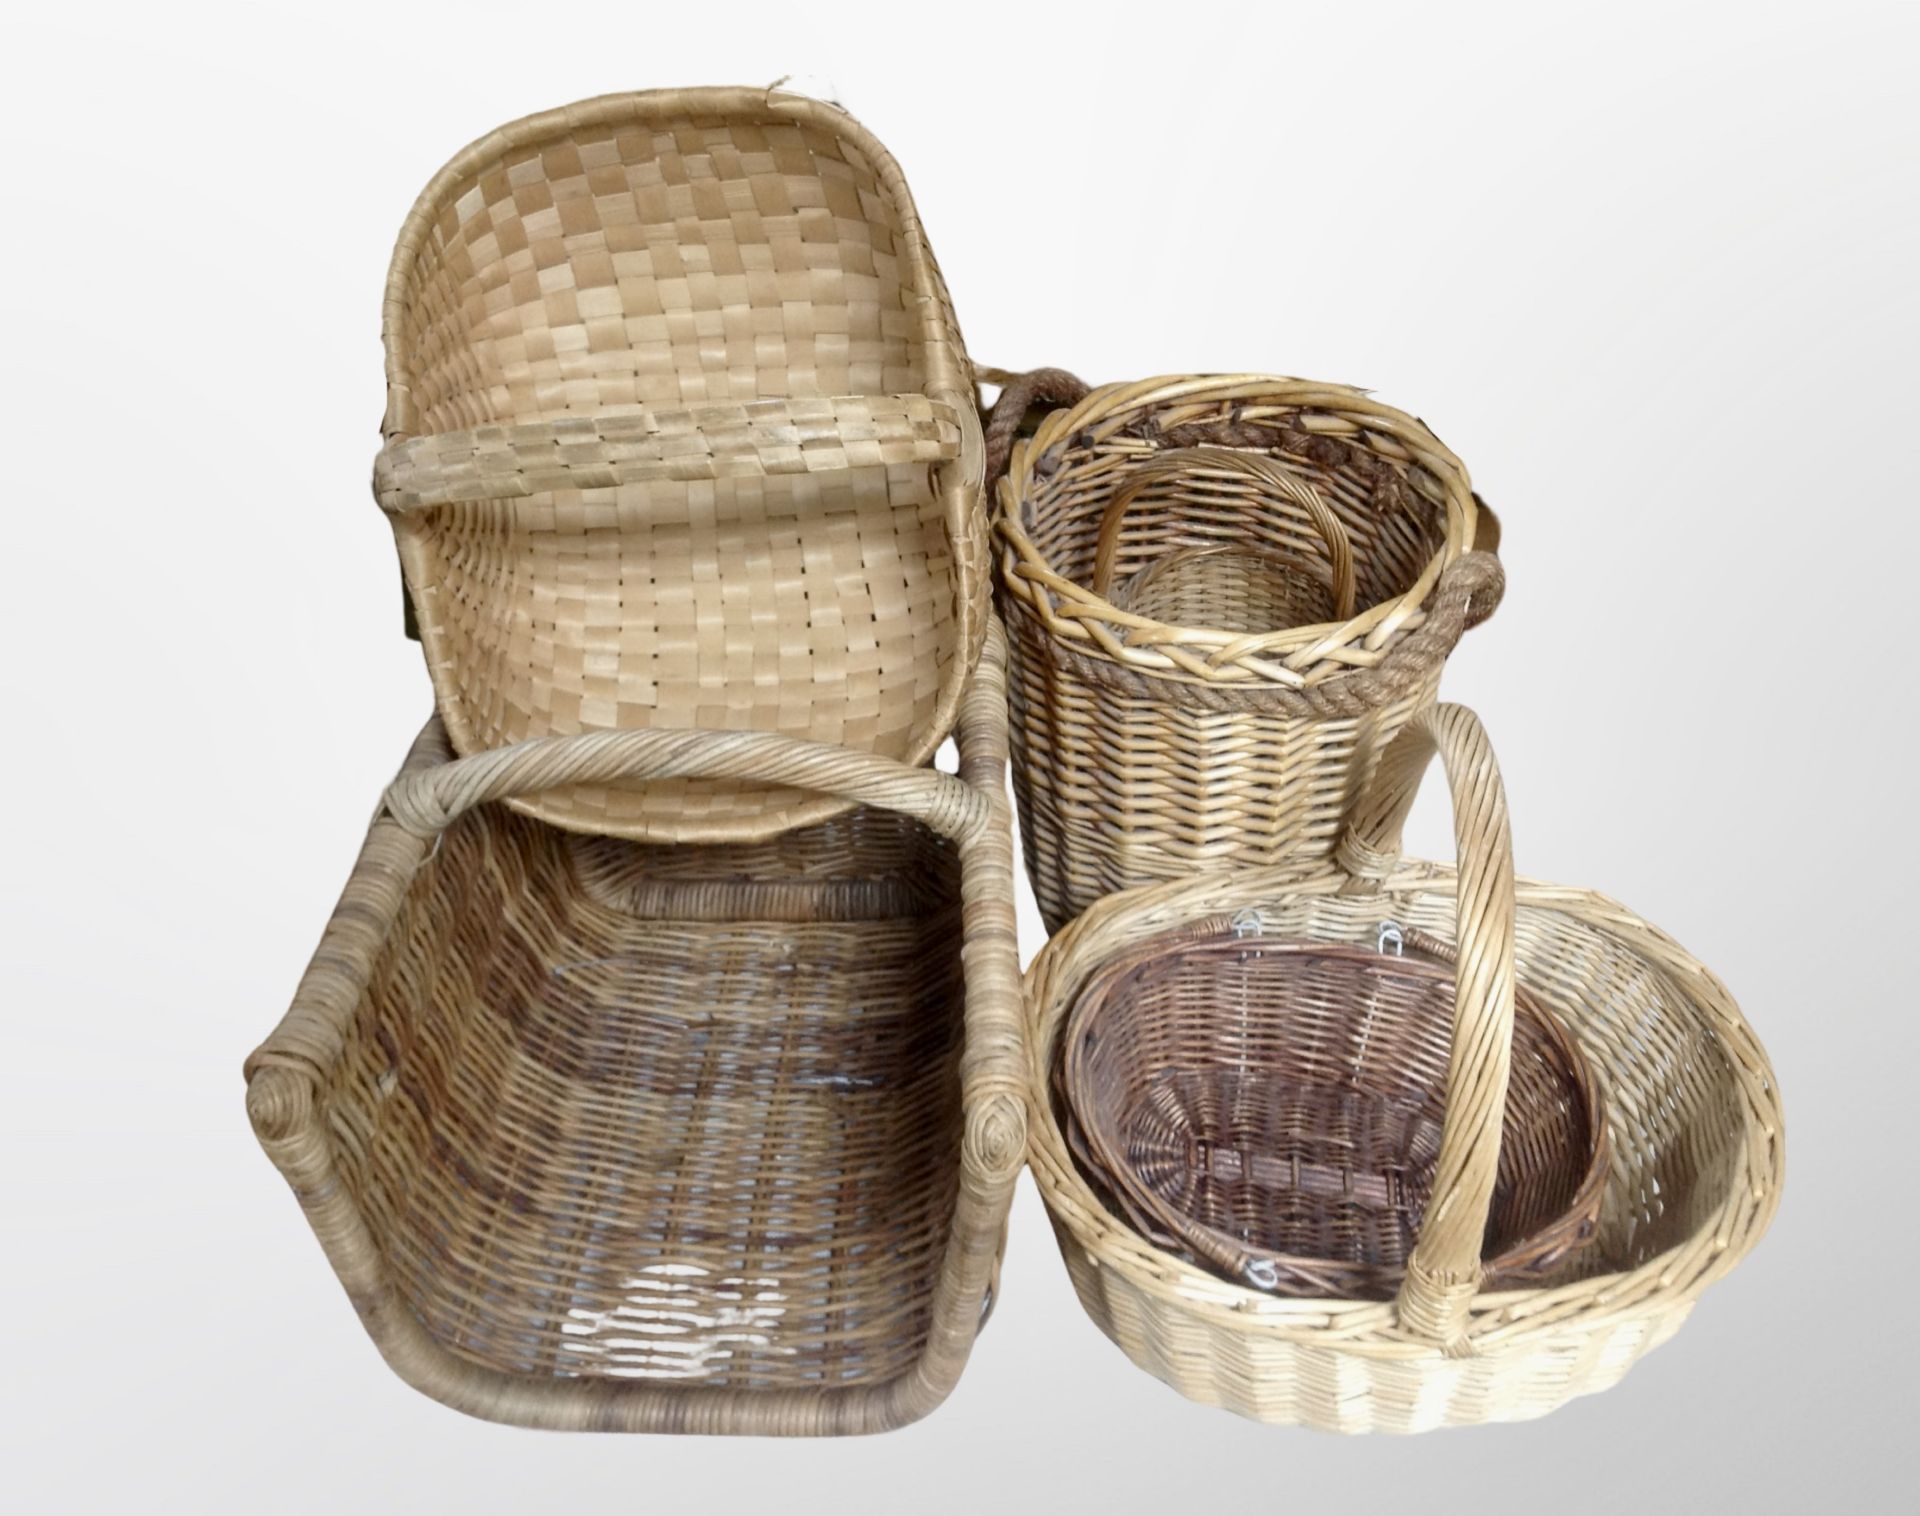 A group of six wicker baskets